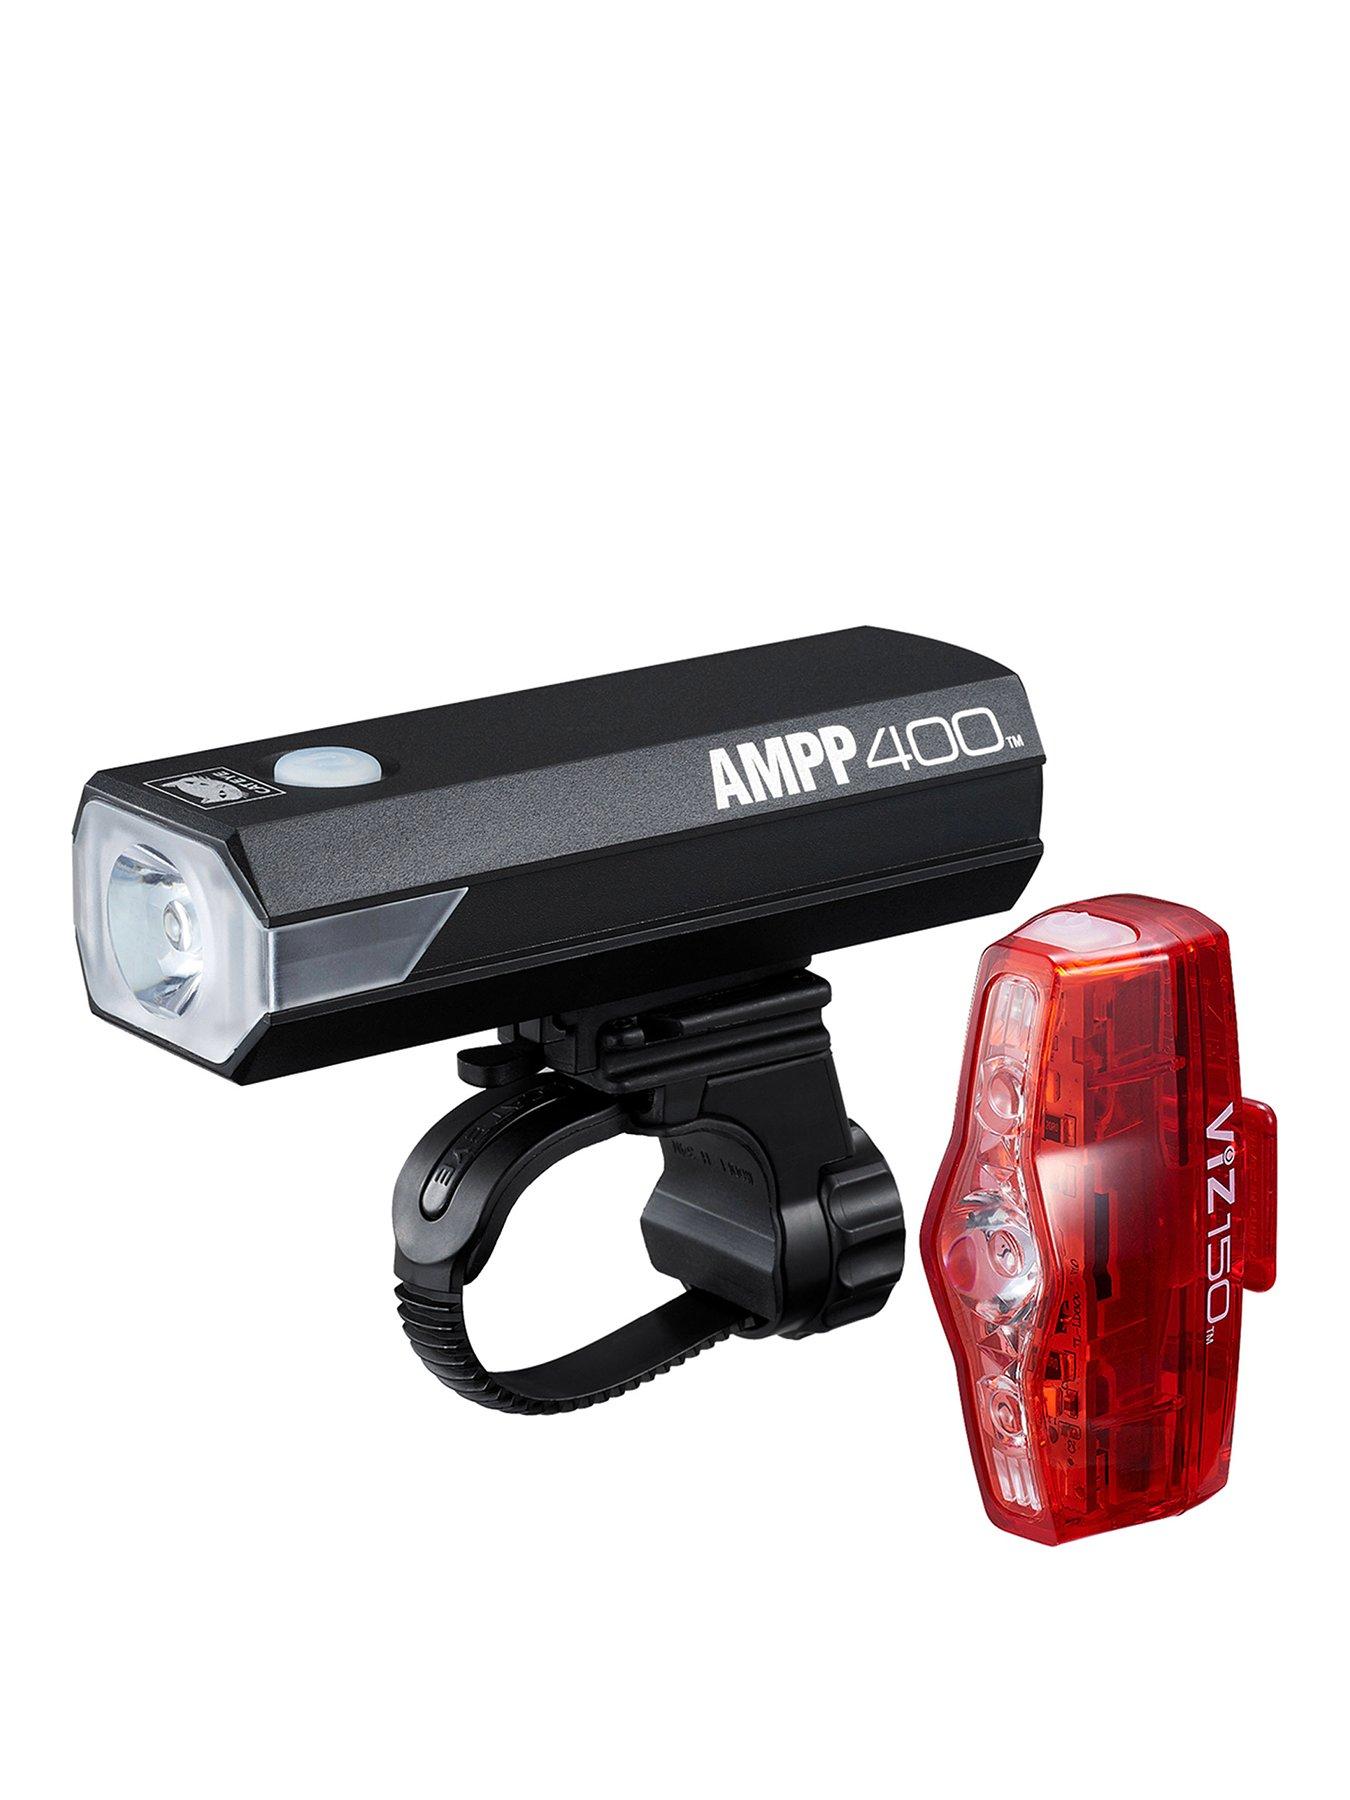 Details about   Mini Mulitifunctional Super Bright LED Bike Light Tail Rear Light Headlight Lamp 